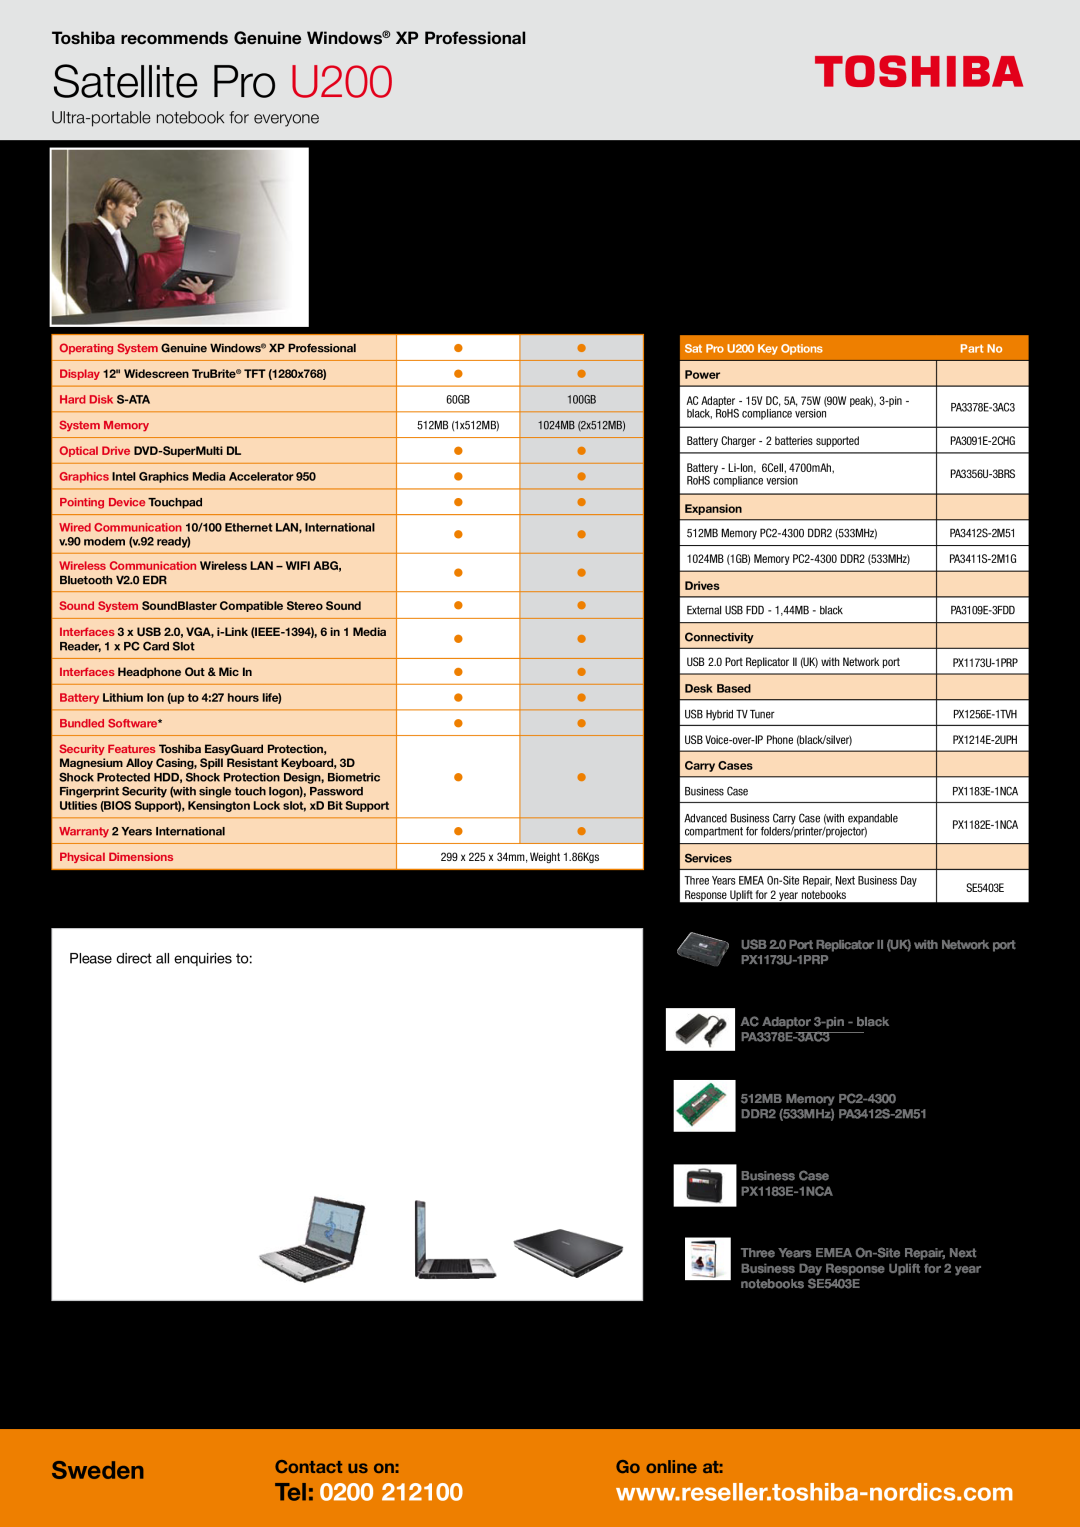 Toshiba Satellite Pro U200, Sweden, Tel 0200, Toshiba recommends Genuine Windows XP Professional, Contact us on, Power 